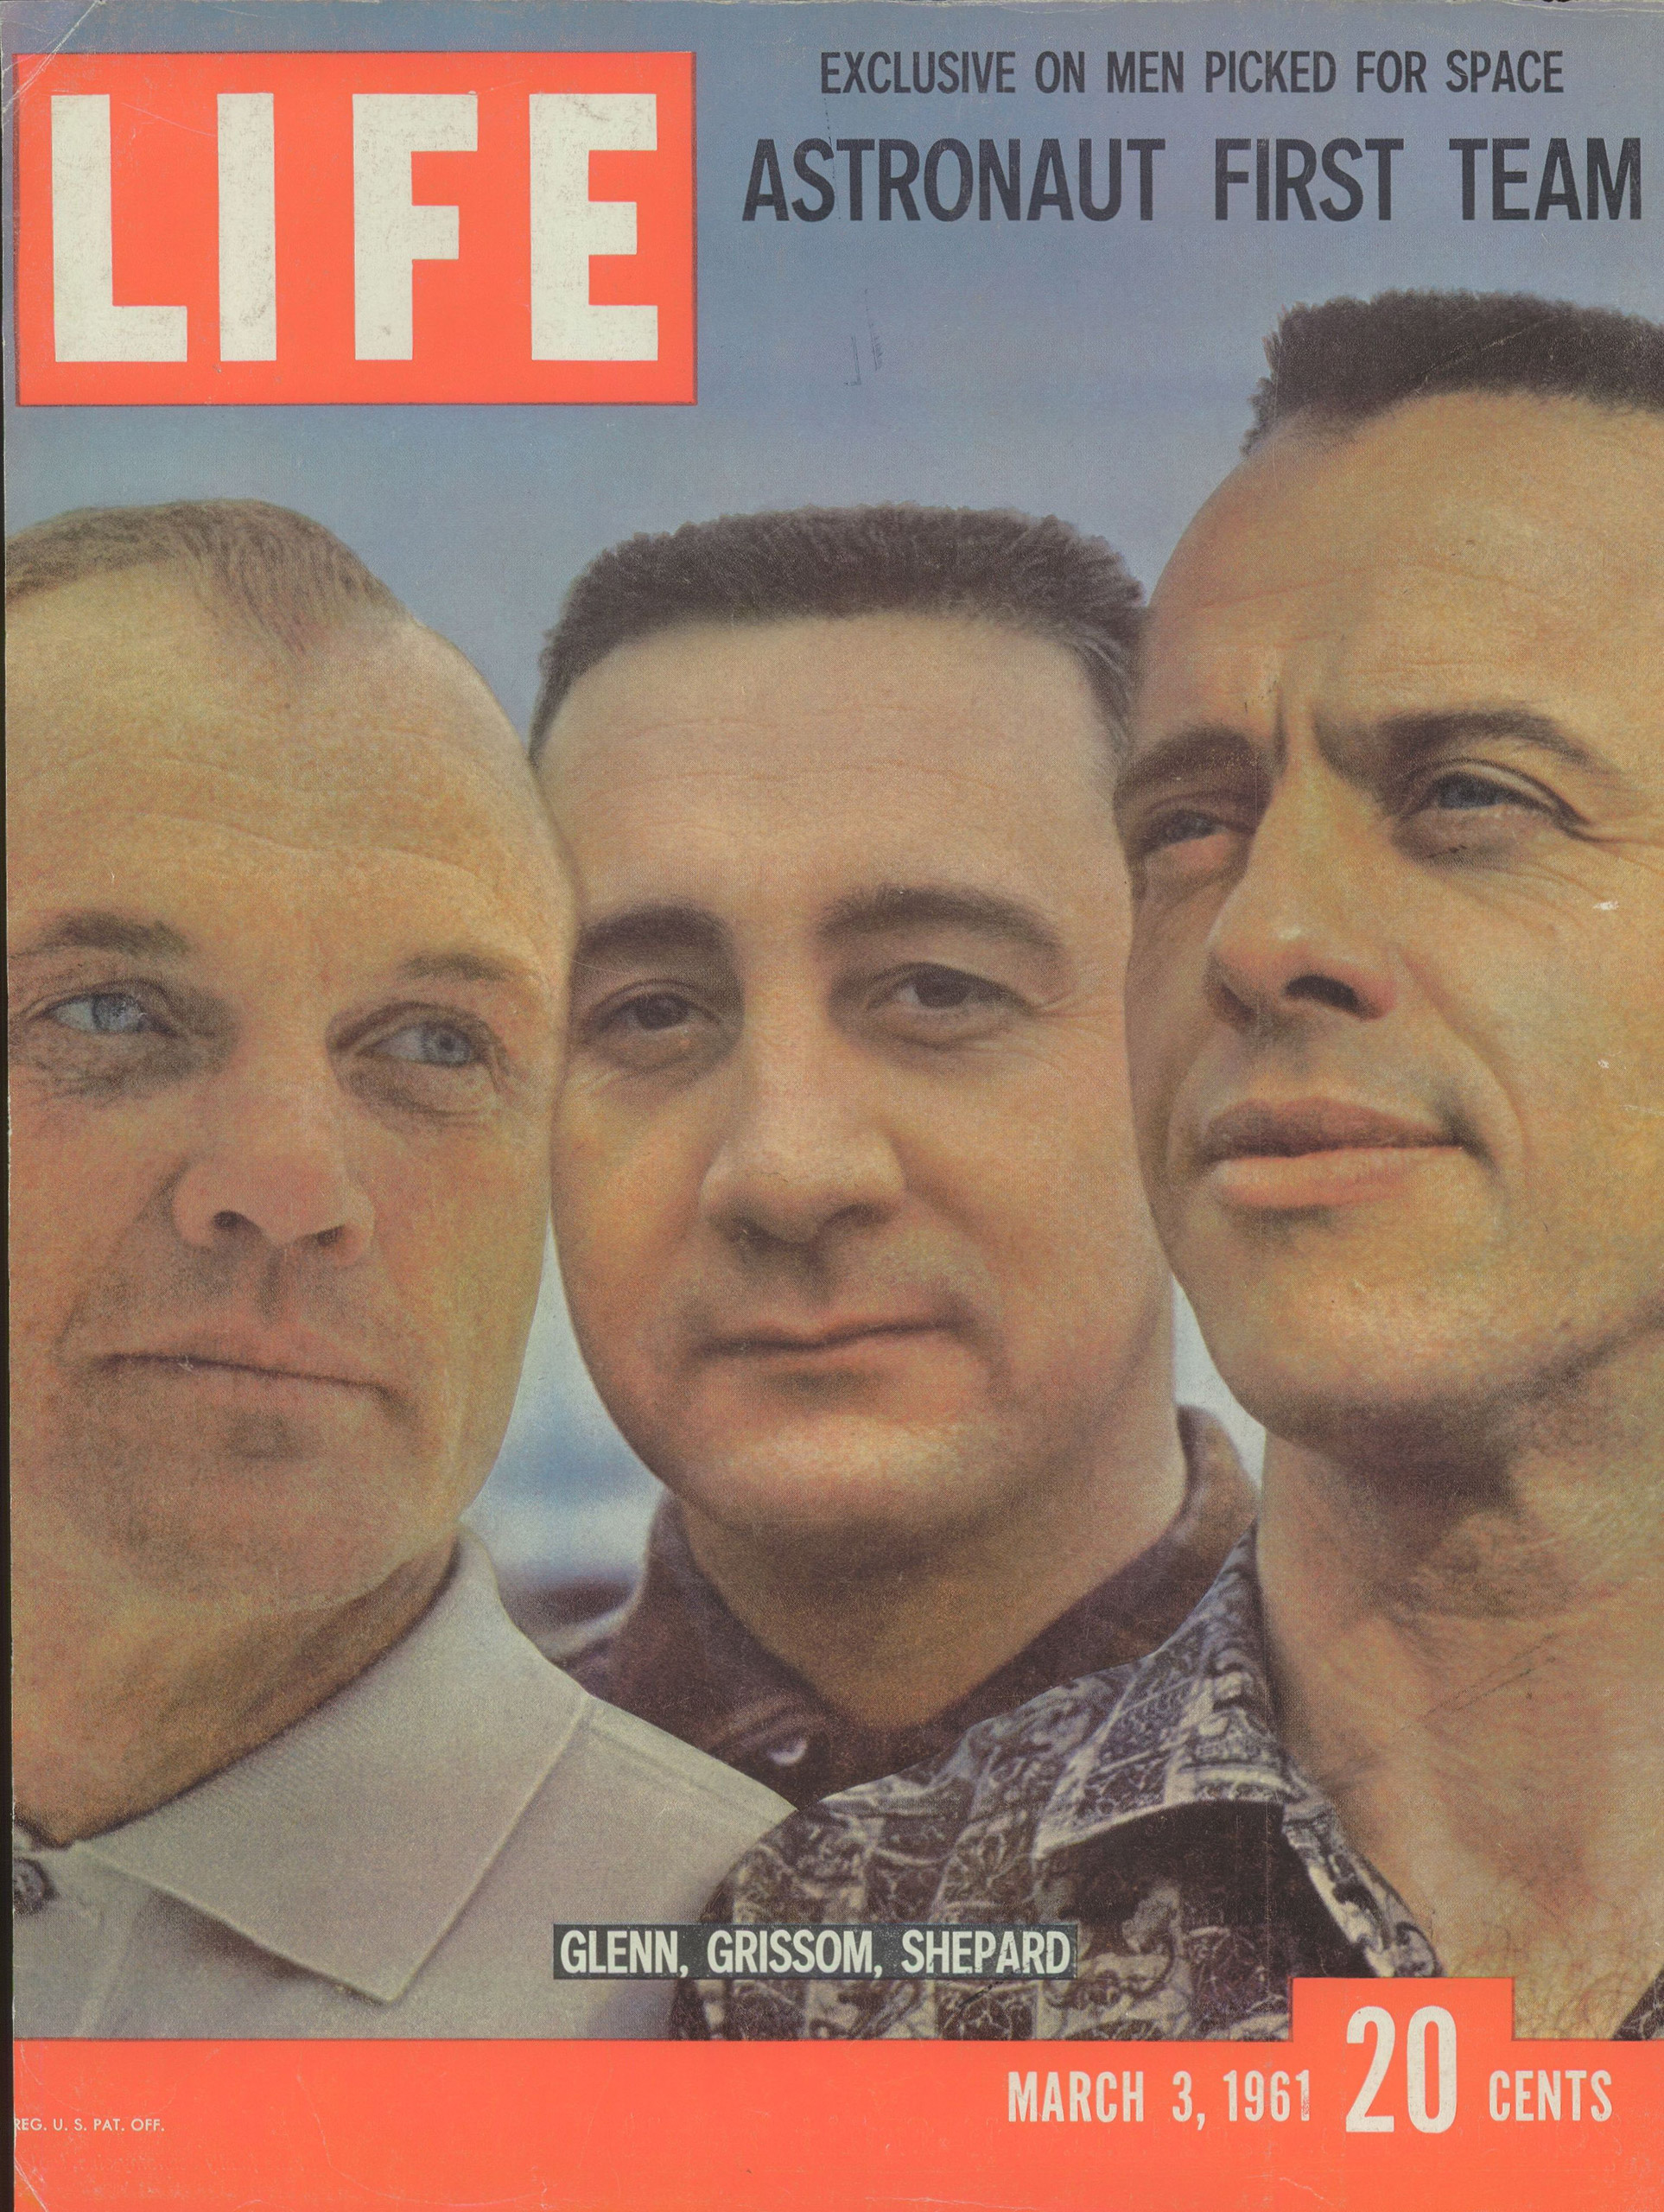 Mar. 3, 1961 cover of LIFE magazine.